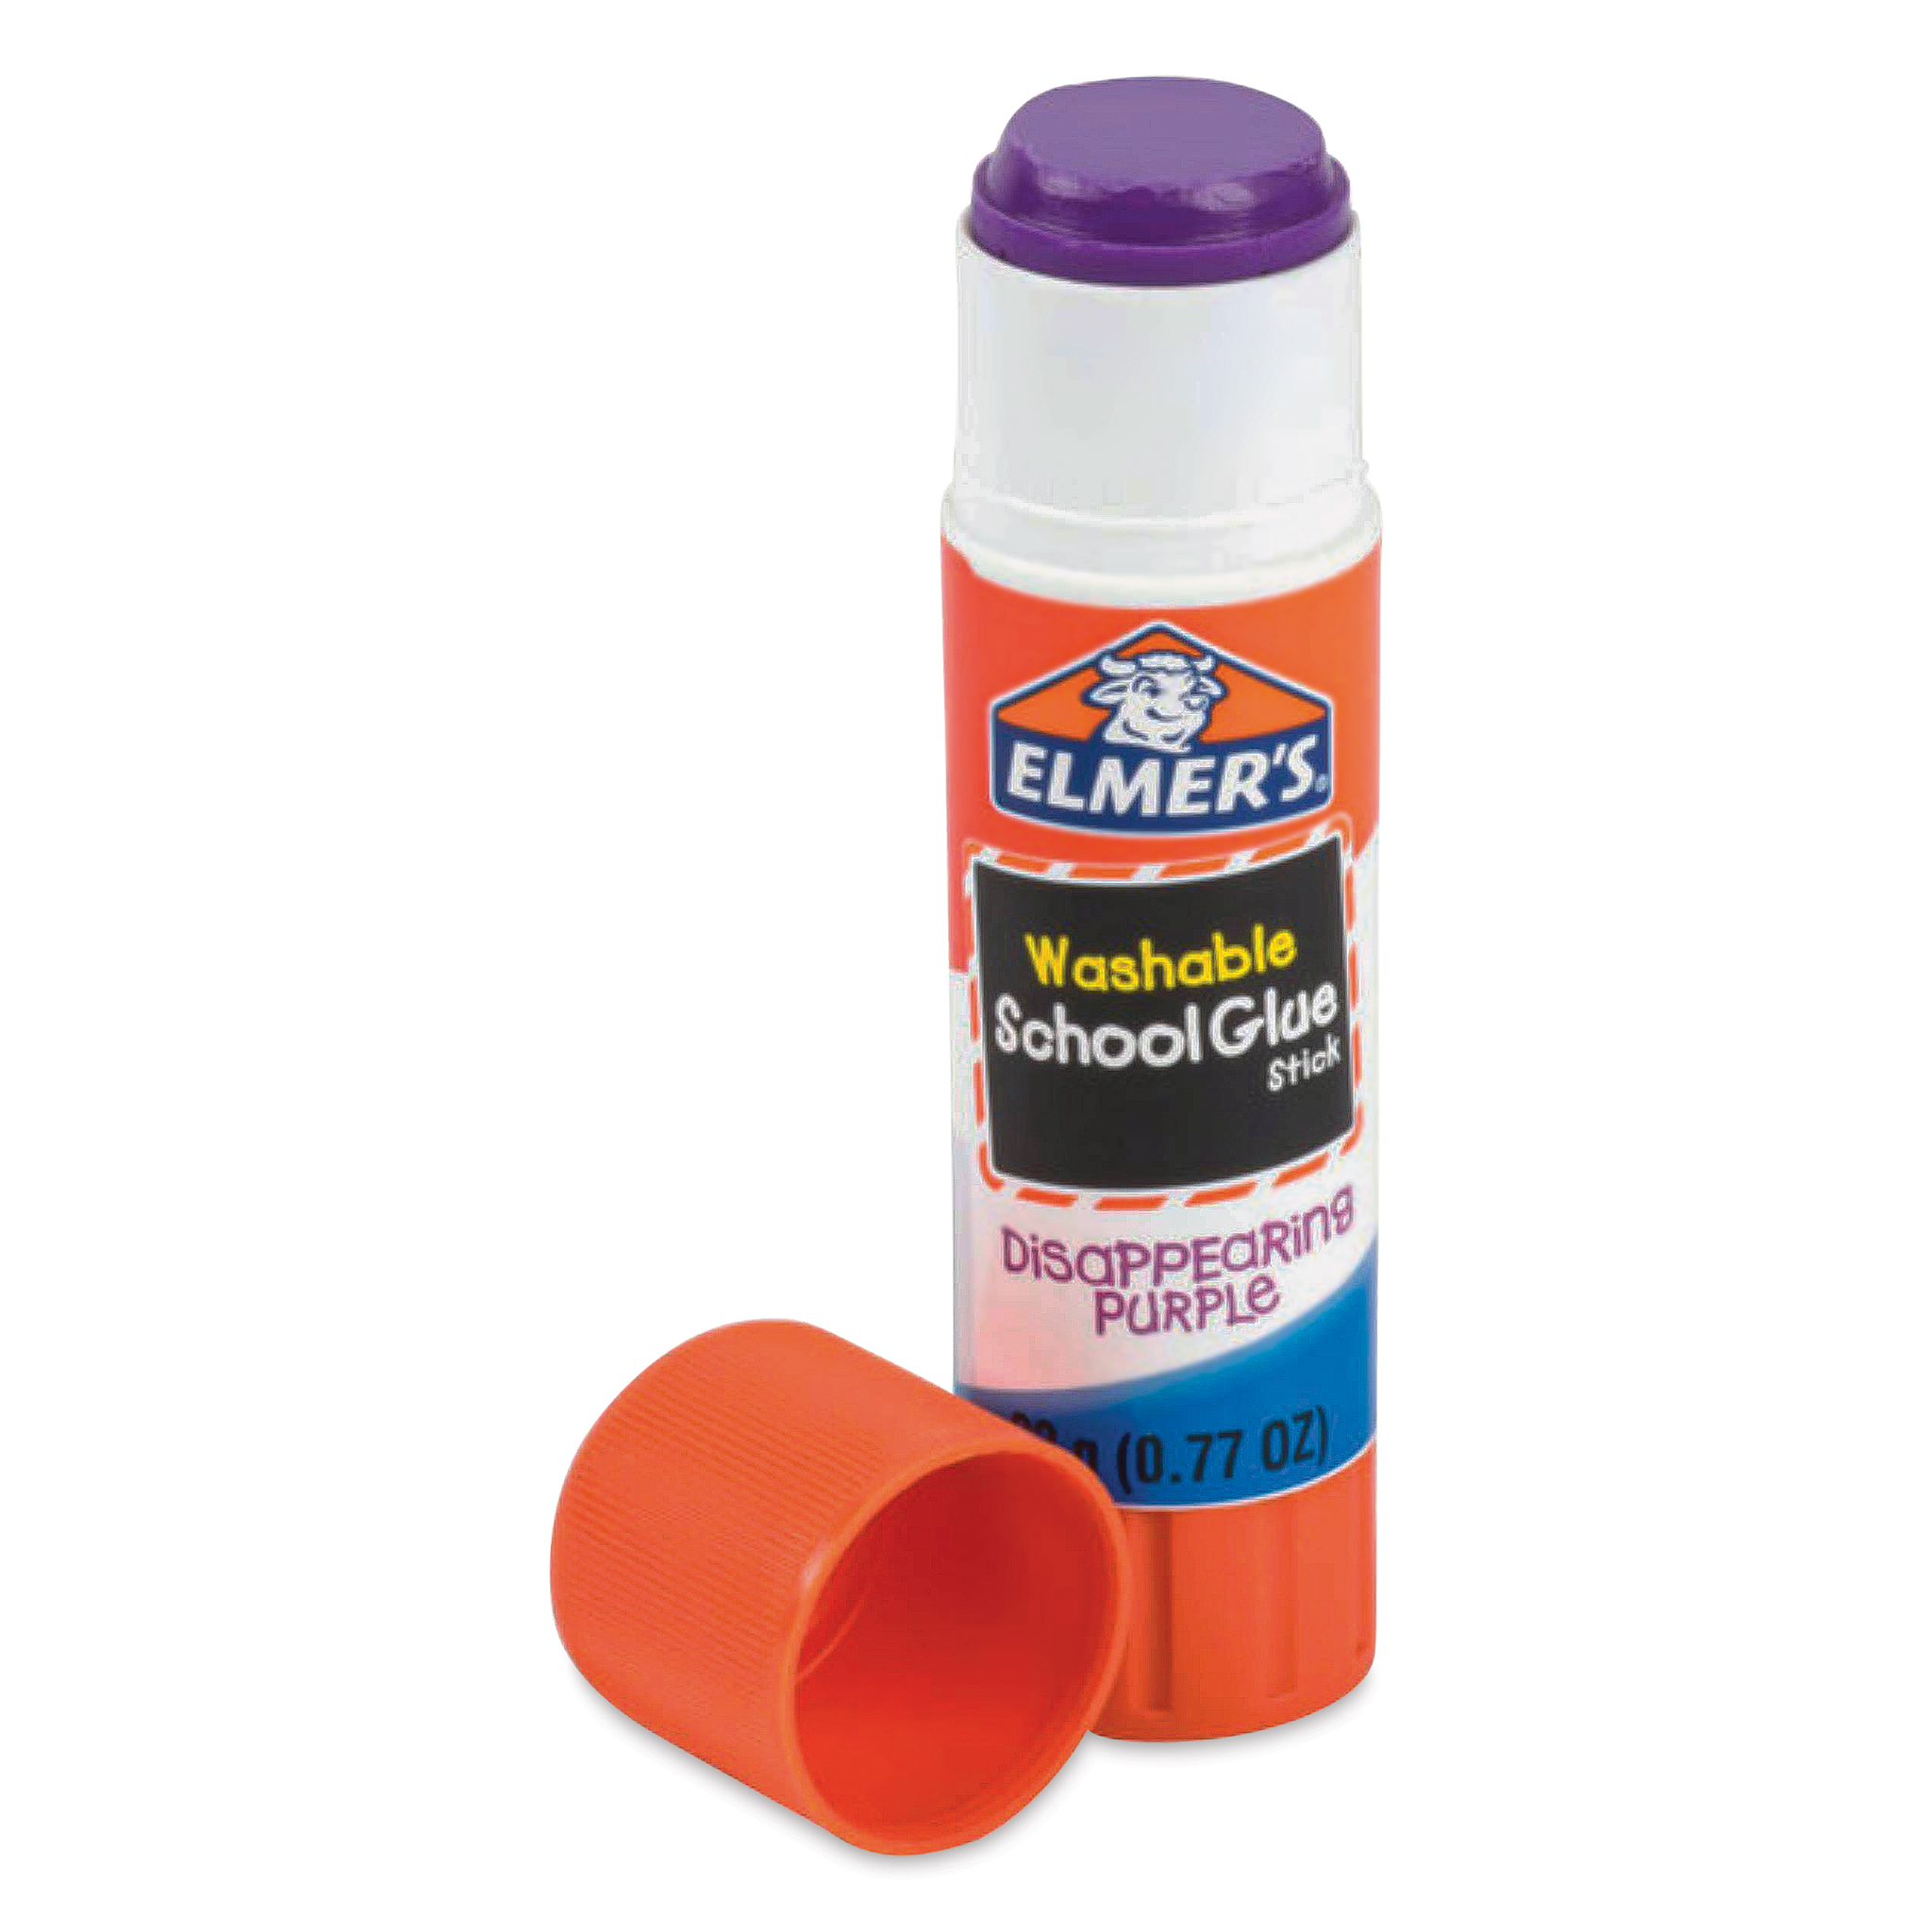 Save on Elmer's School Glue Sticks Disappearing Purple Washable